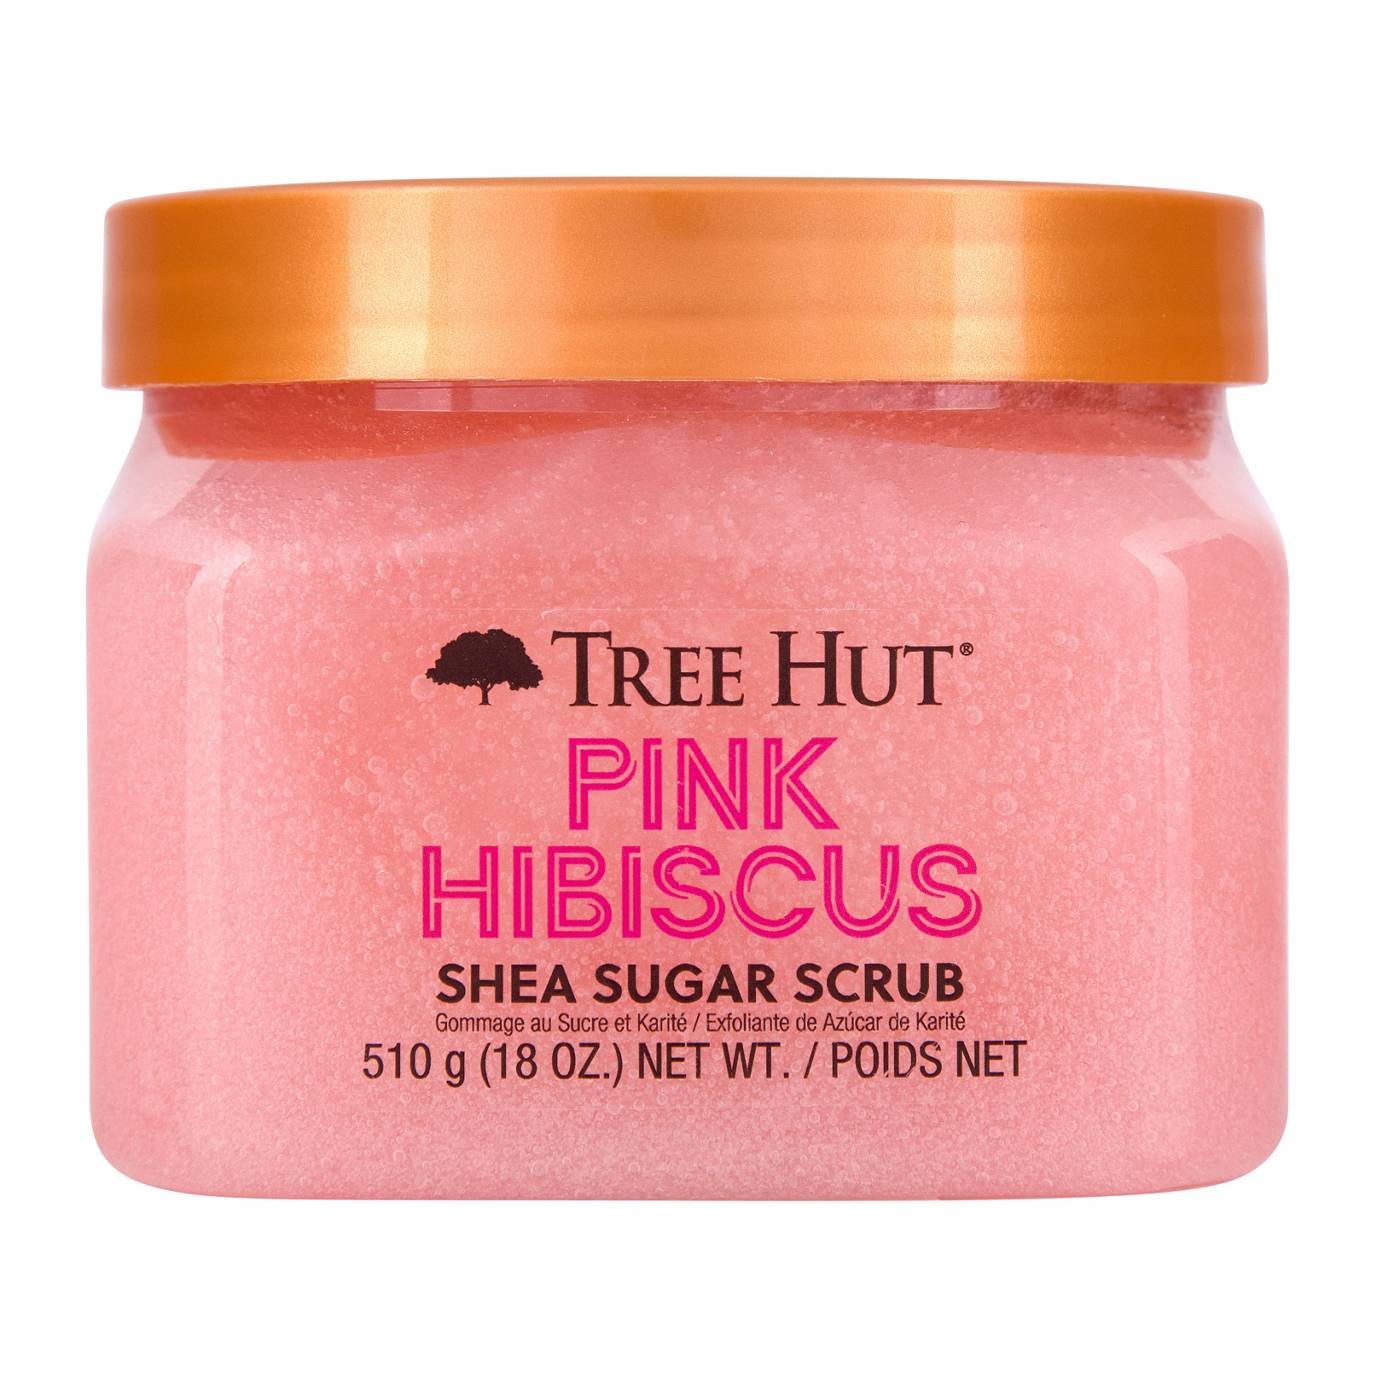 Tree Hut Shea Sugar Scrub - Pink Hibiscus; image 1 of 2